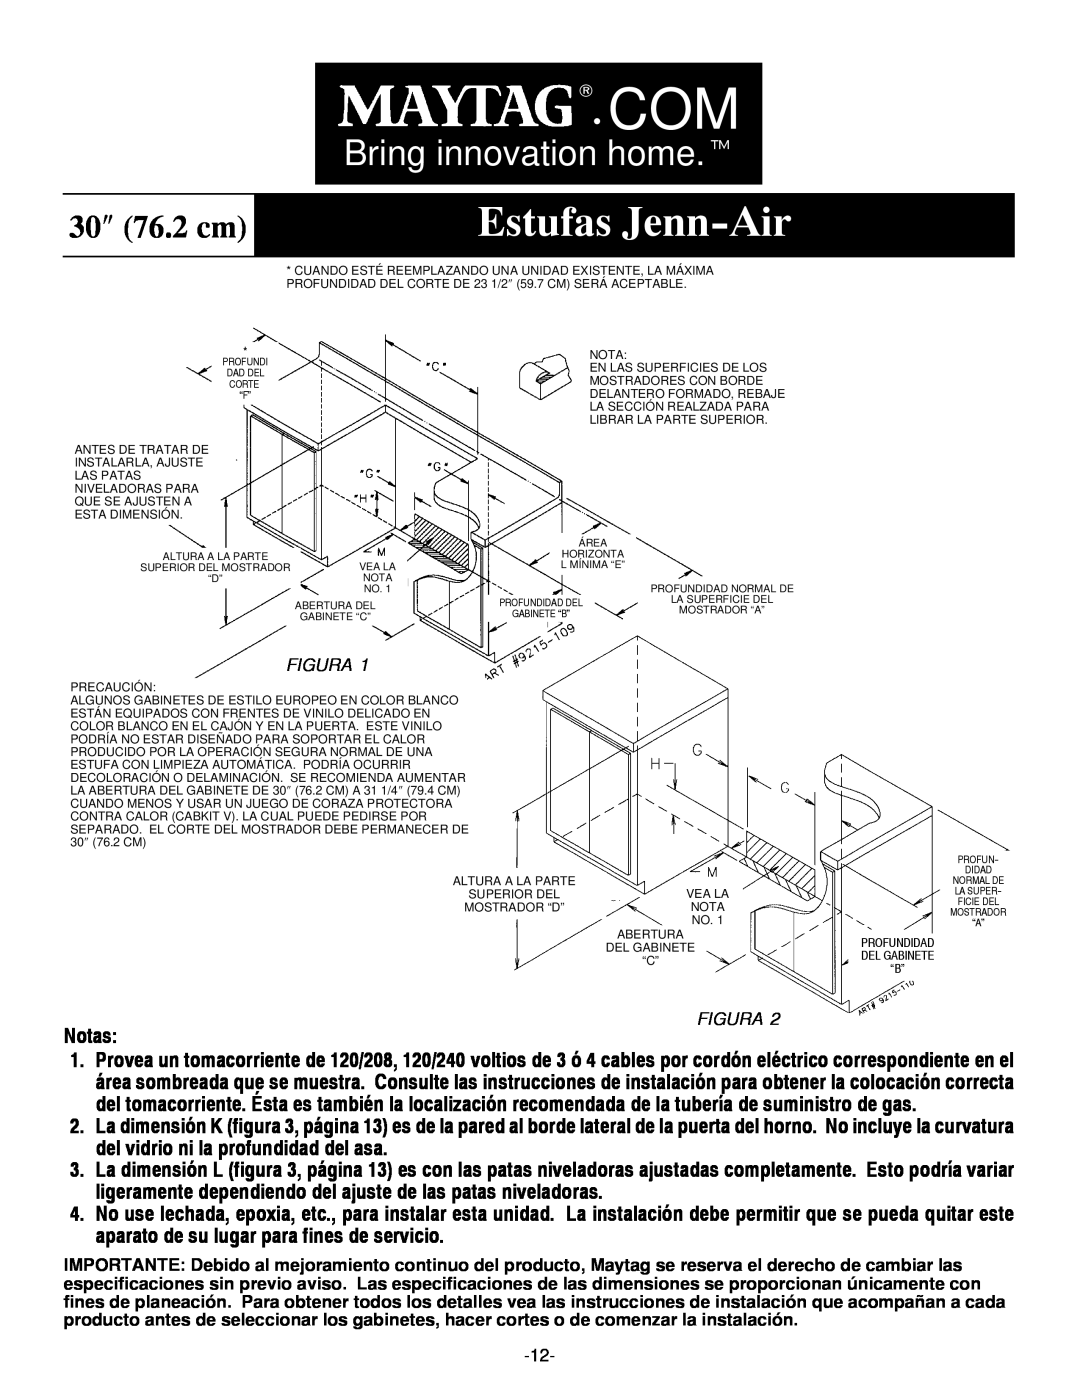 Jenn-Air Range installation manual Estufas Jenn-Air, Bring innovation home.t, 30 76.2 cm 